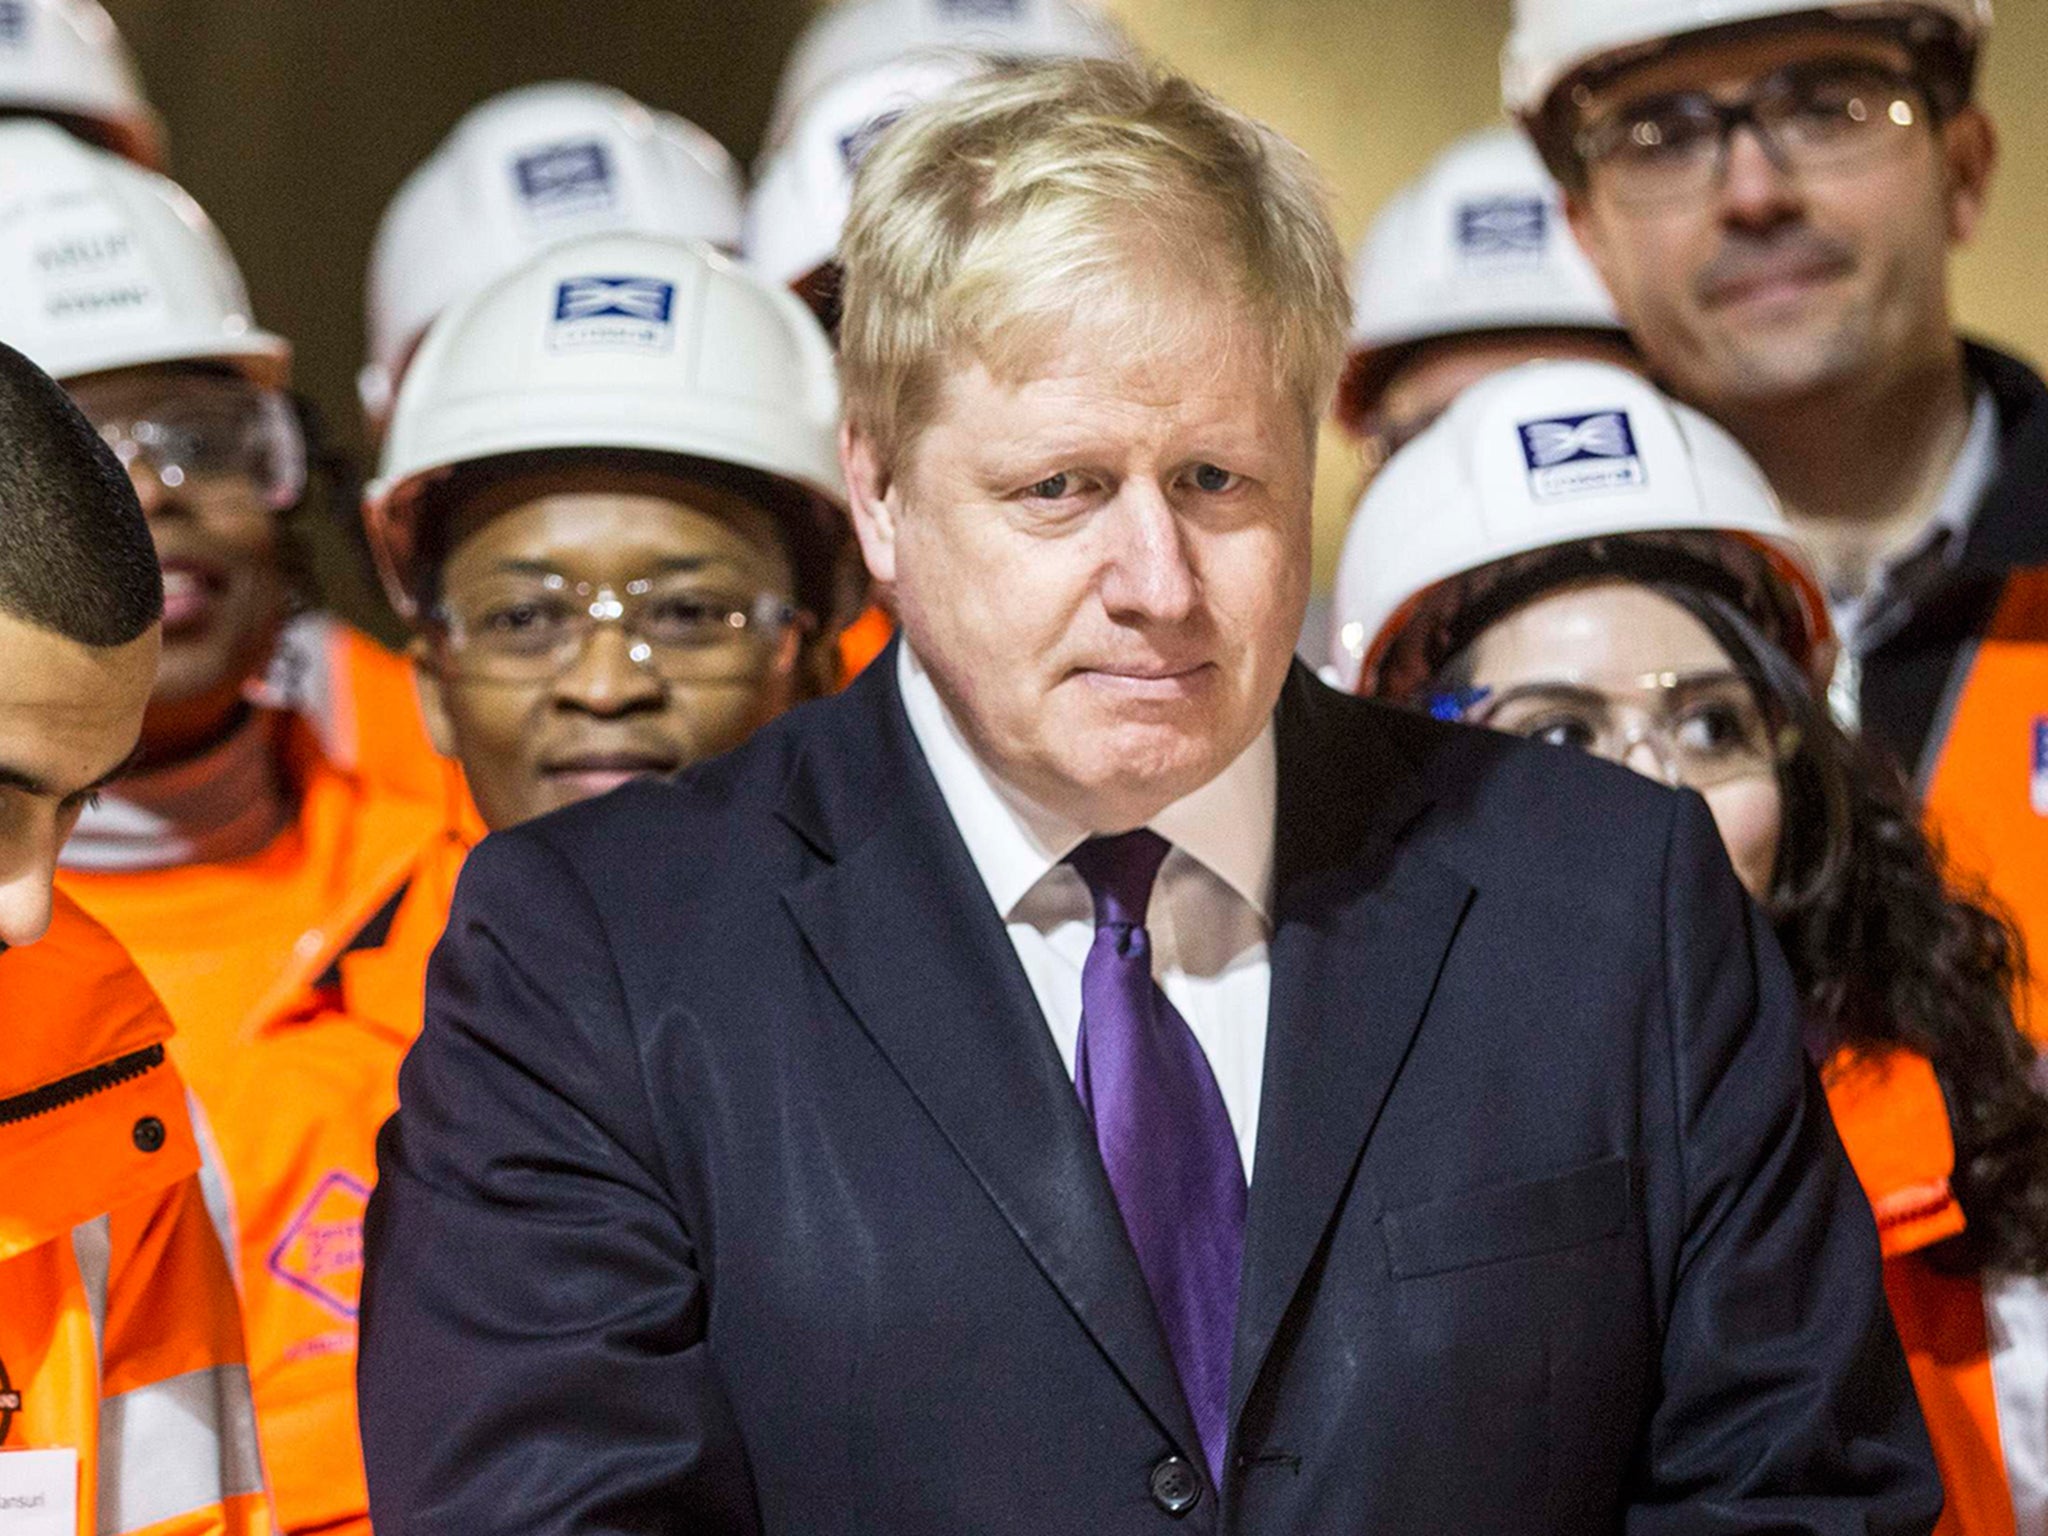 Mayor of London Boris Johnson has backed Brexit